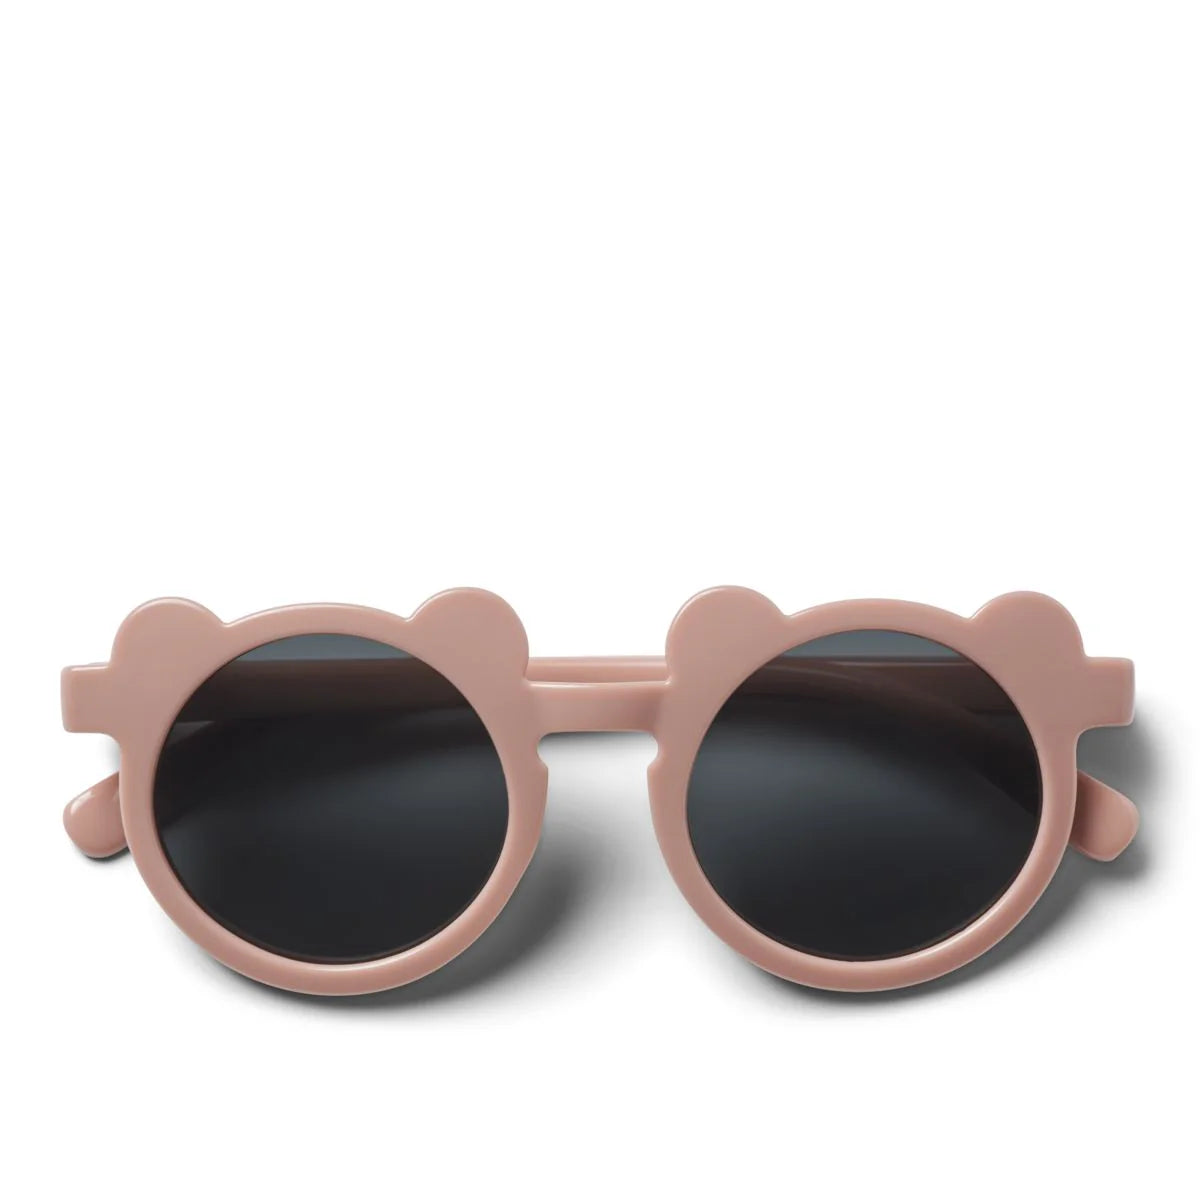 Darla Mr. Bear Sunglasses - Tuscany Rose